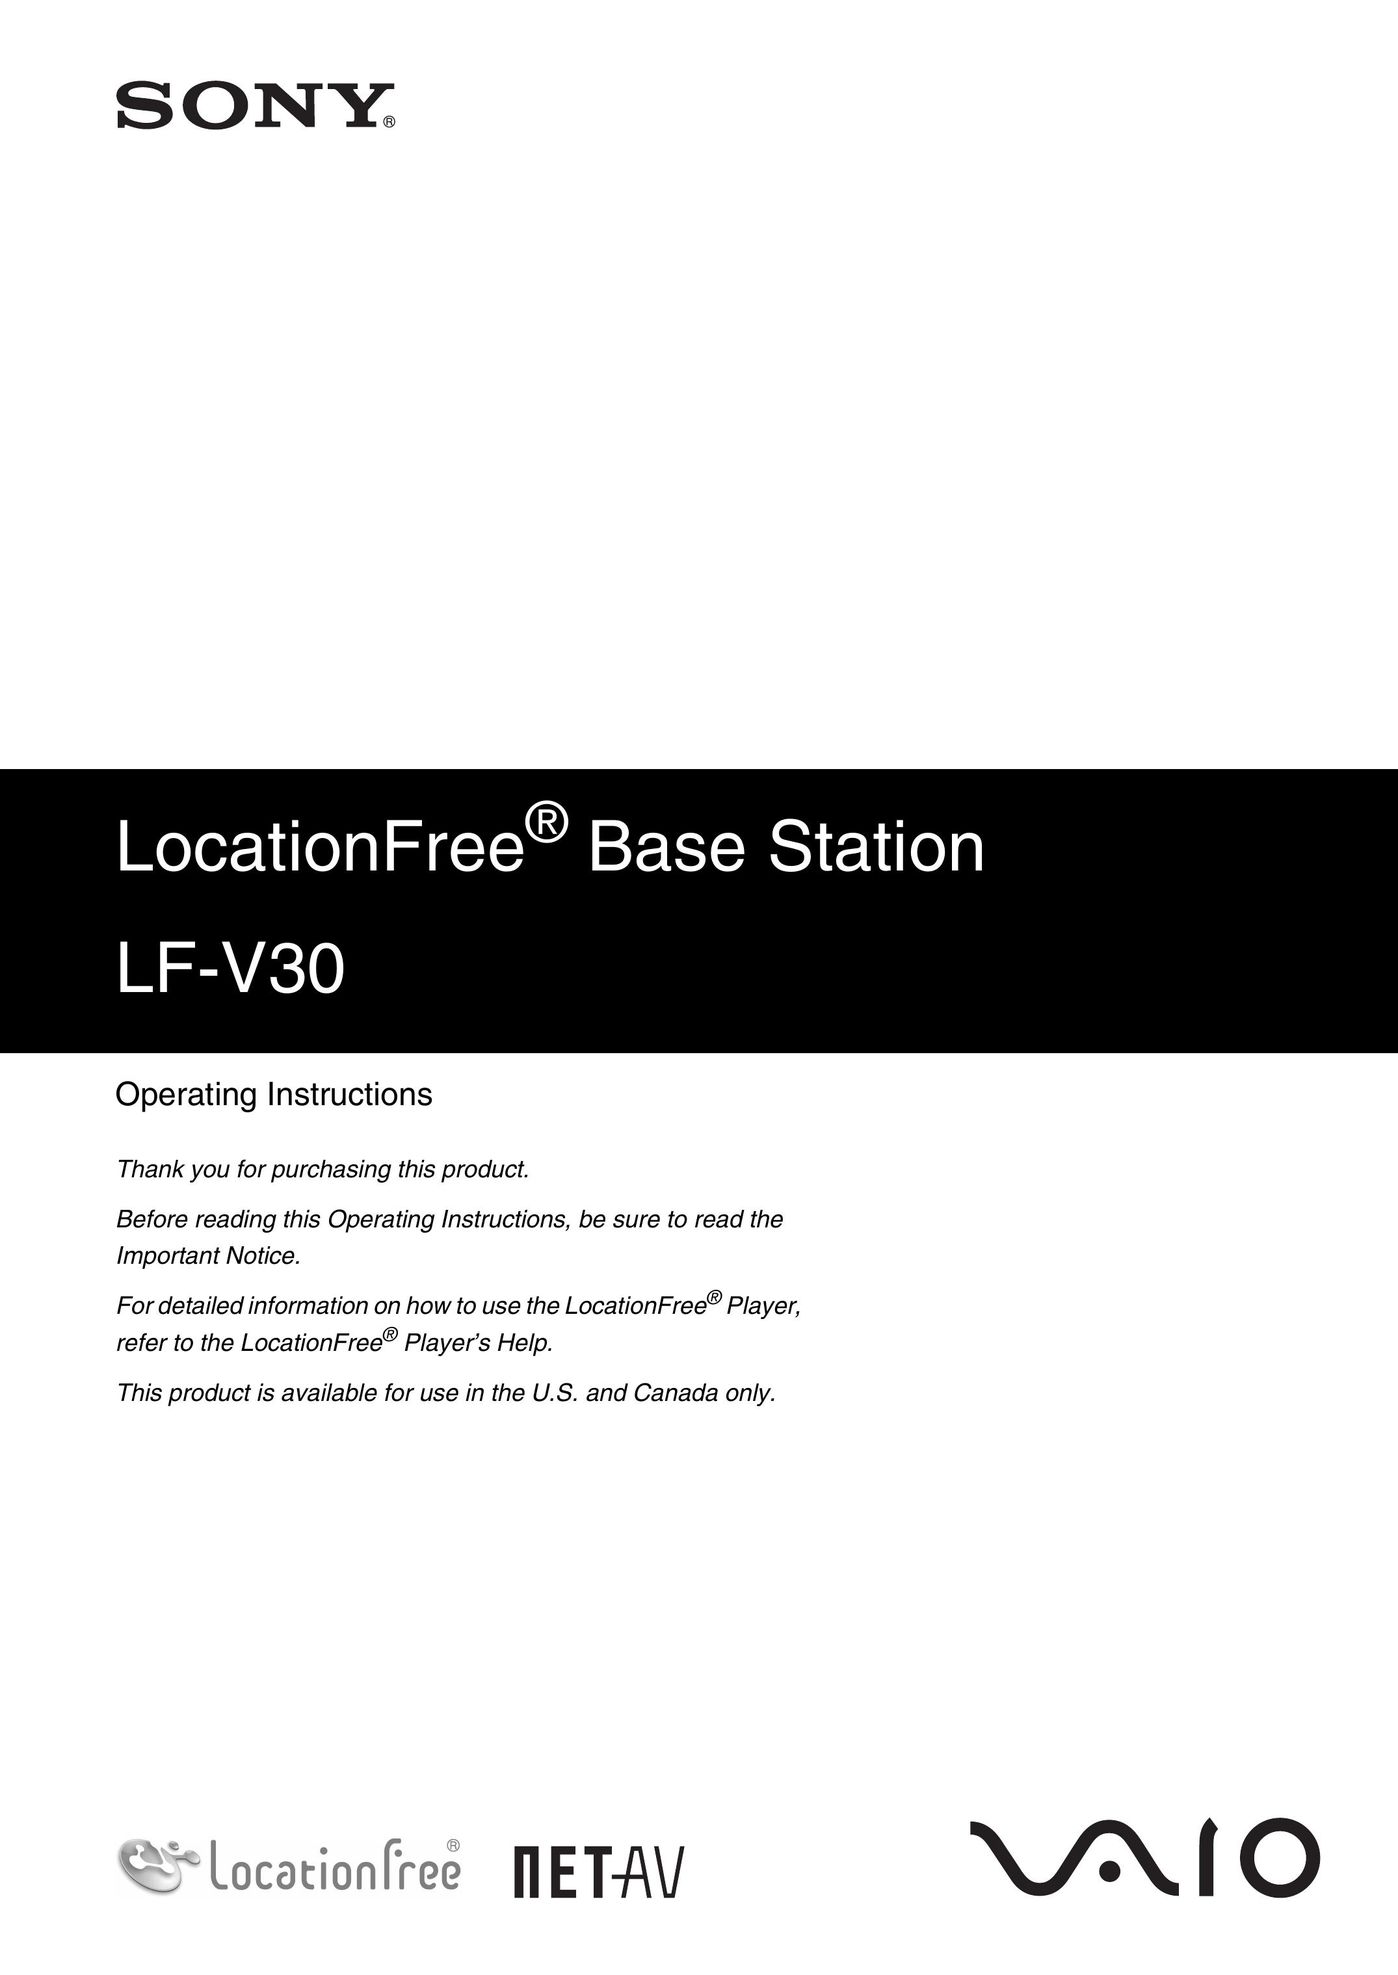 Sony LF-V30 Home Theater Server User Manual